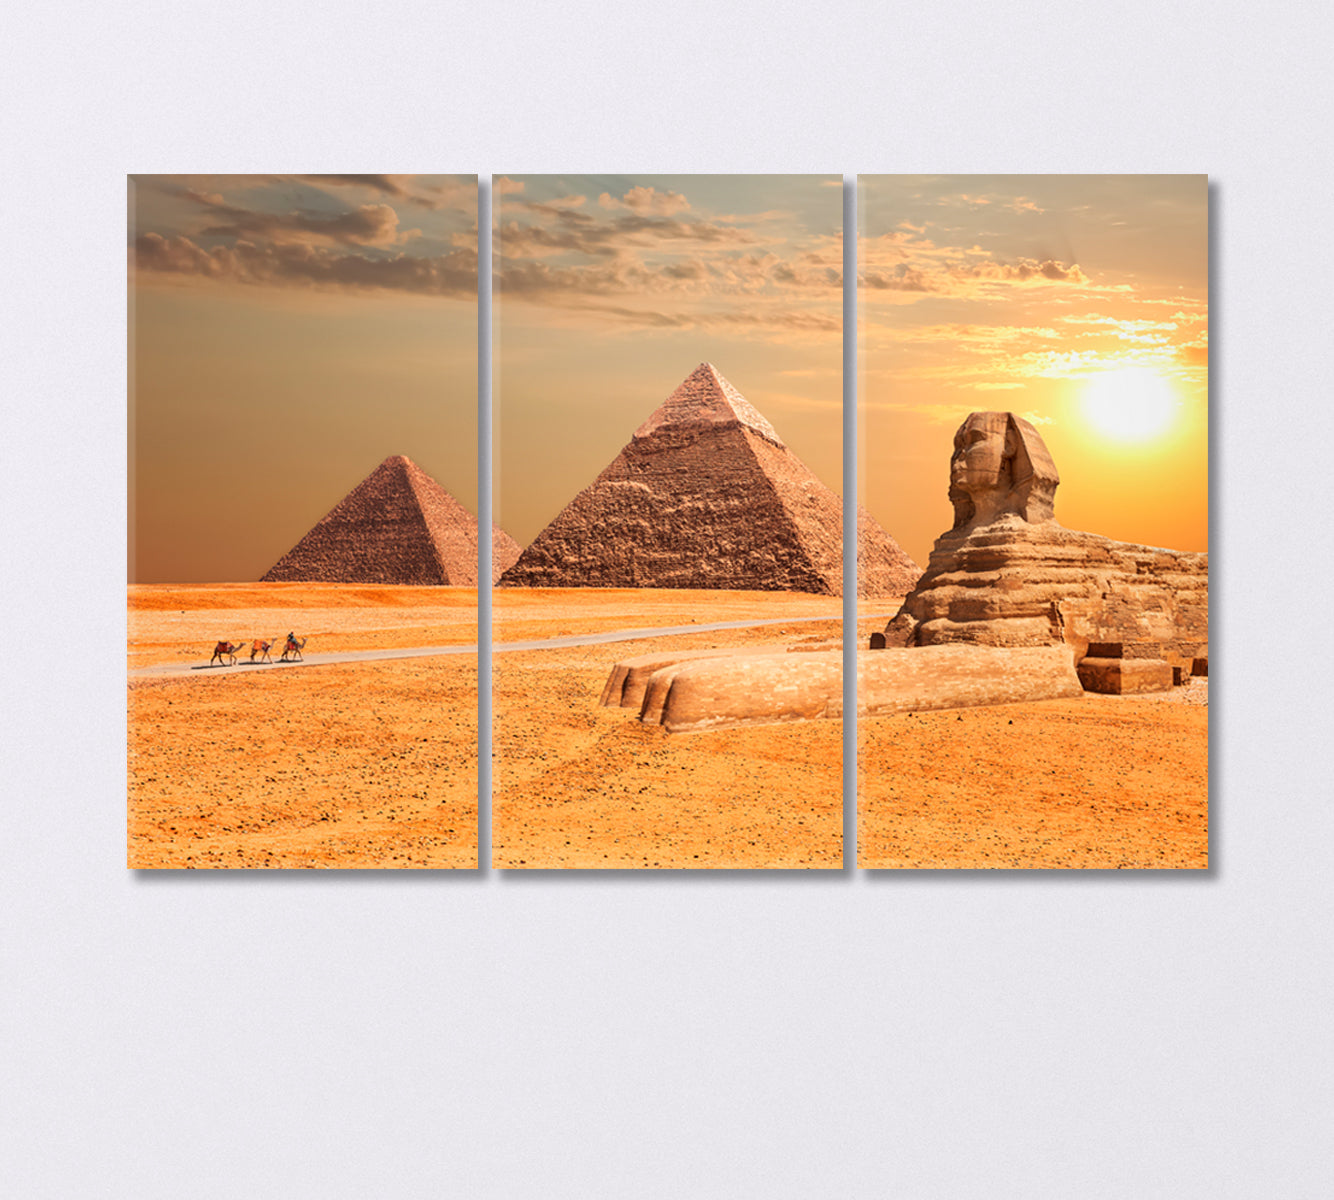 Sphinx and Pyramids at Sunset Giza Egypt Canvas Print-Canvas Print-CetArt-3 Panels-36x24 inches-CetArt